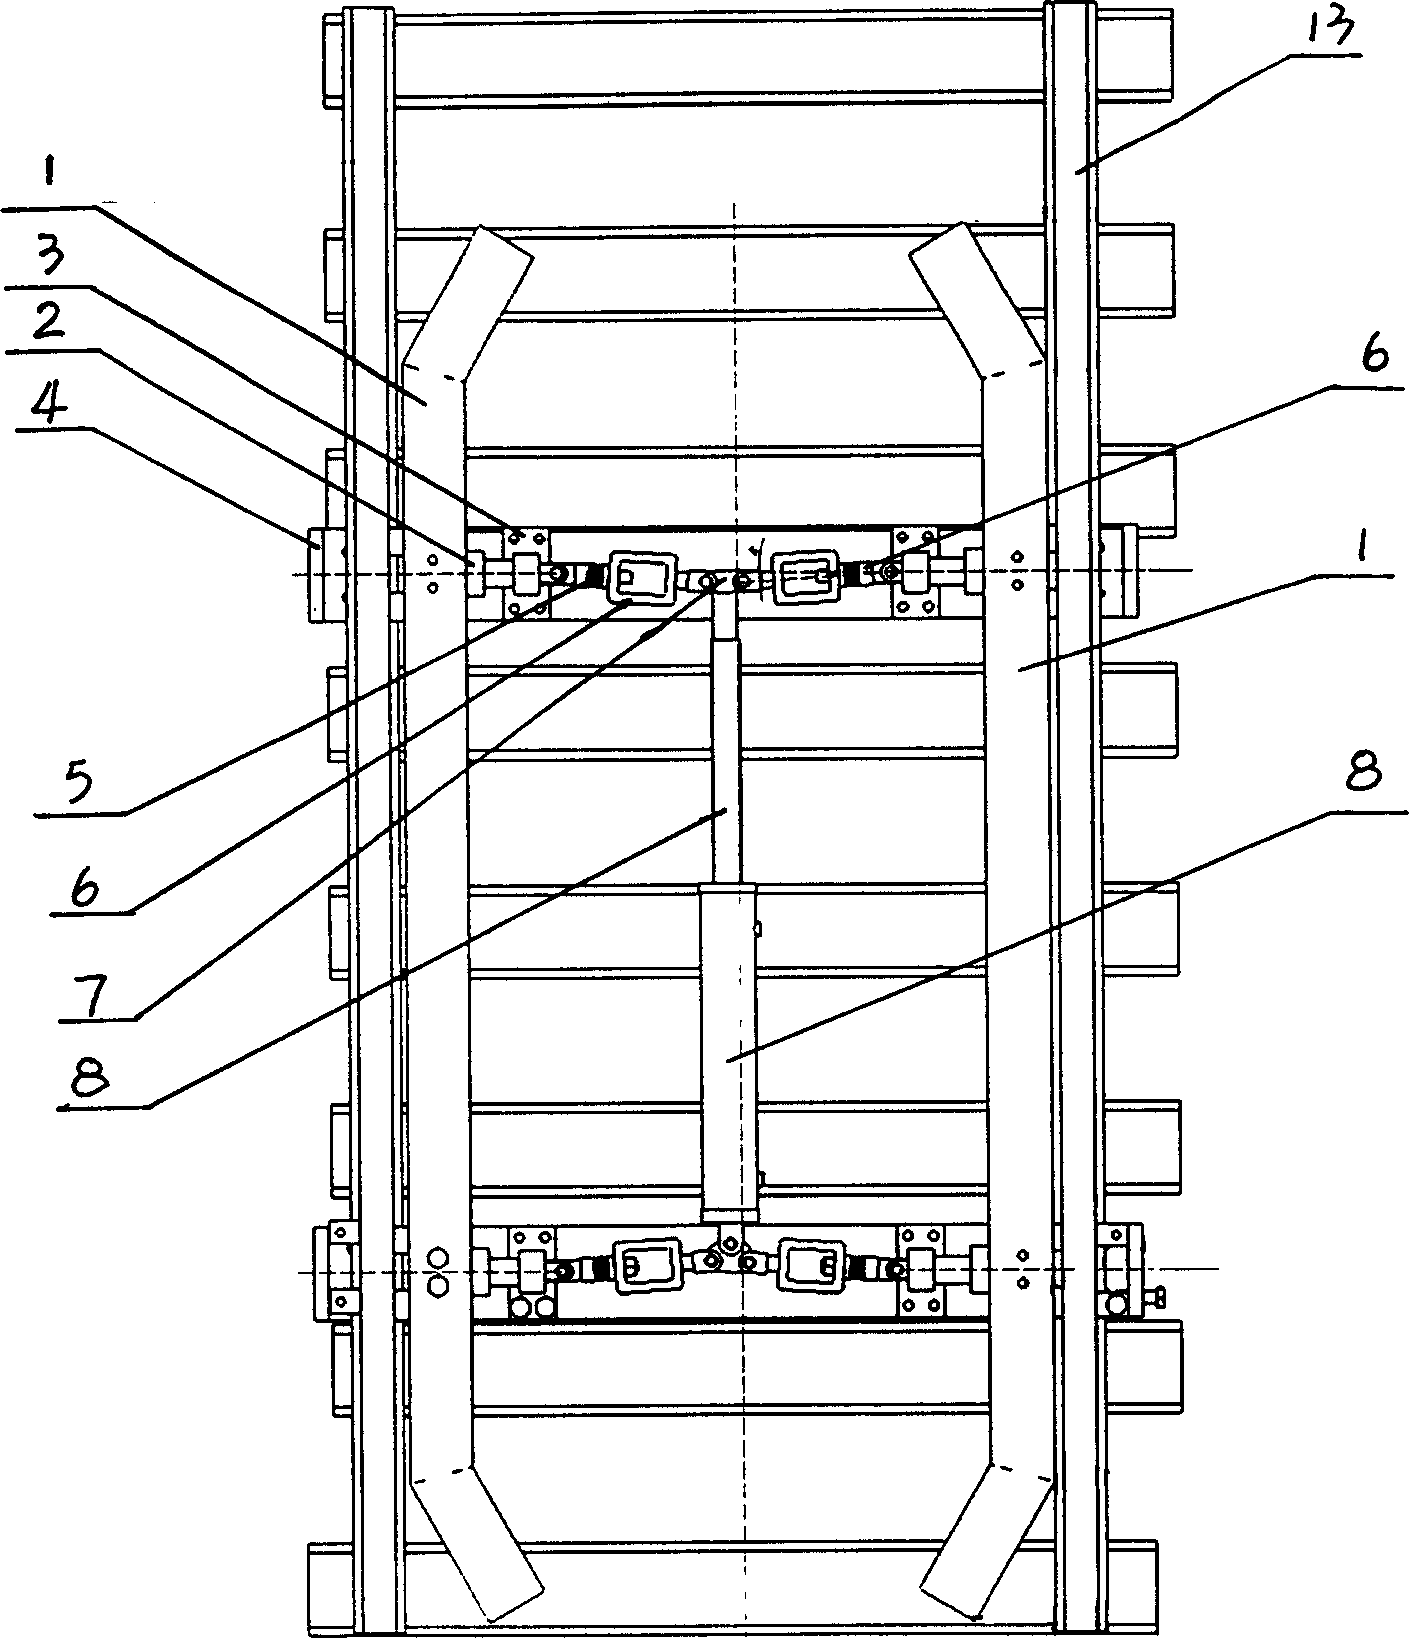 Locomotive anti-slide apparatus